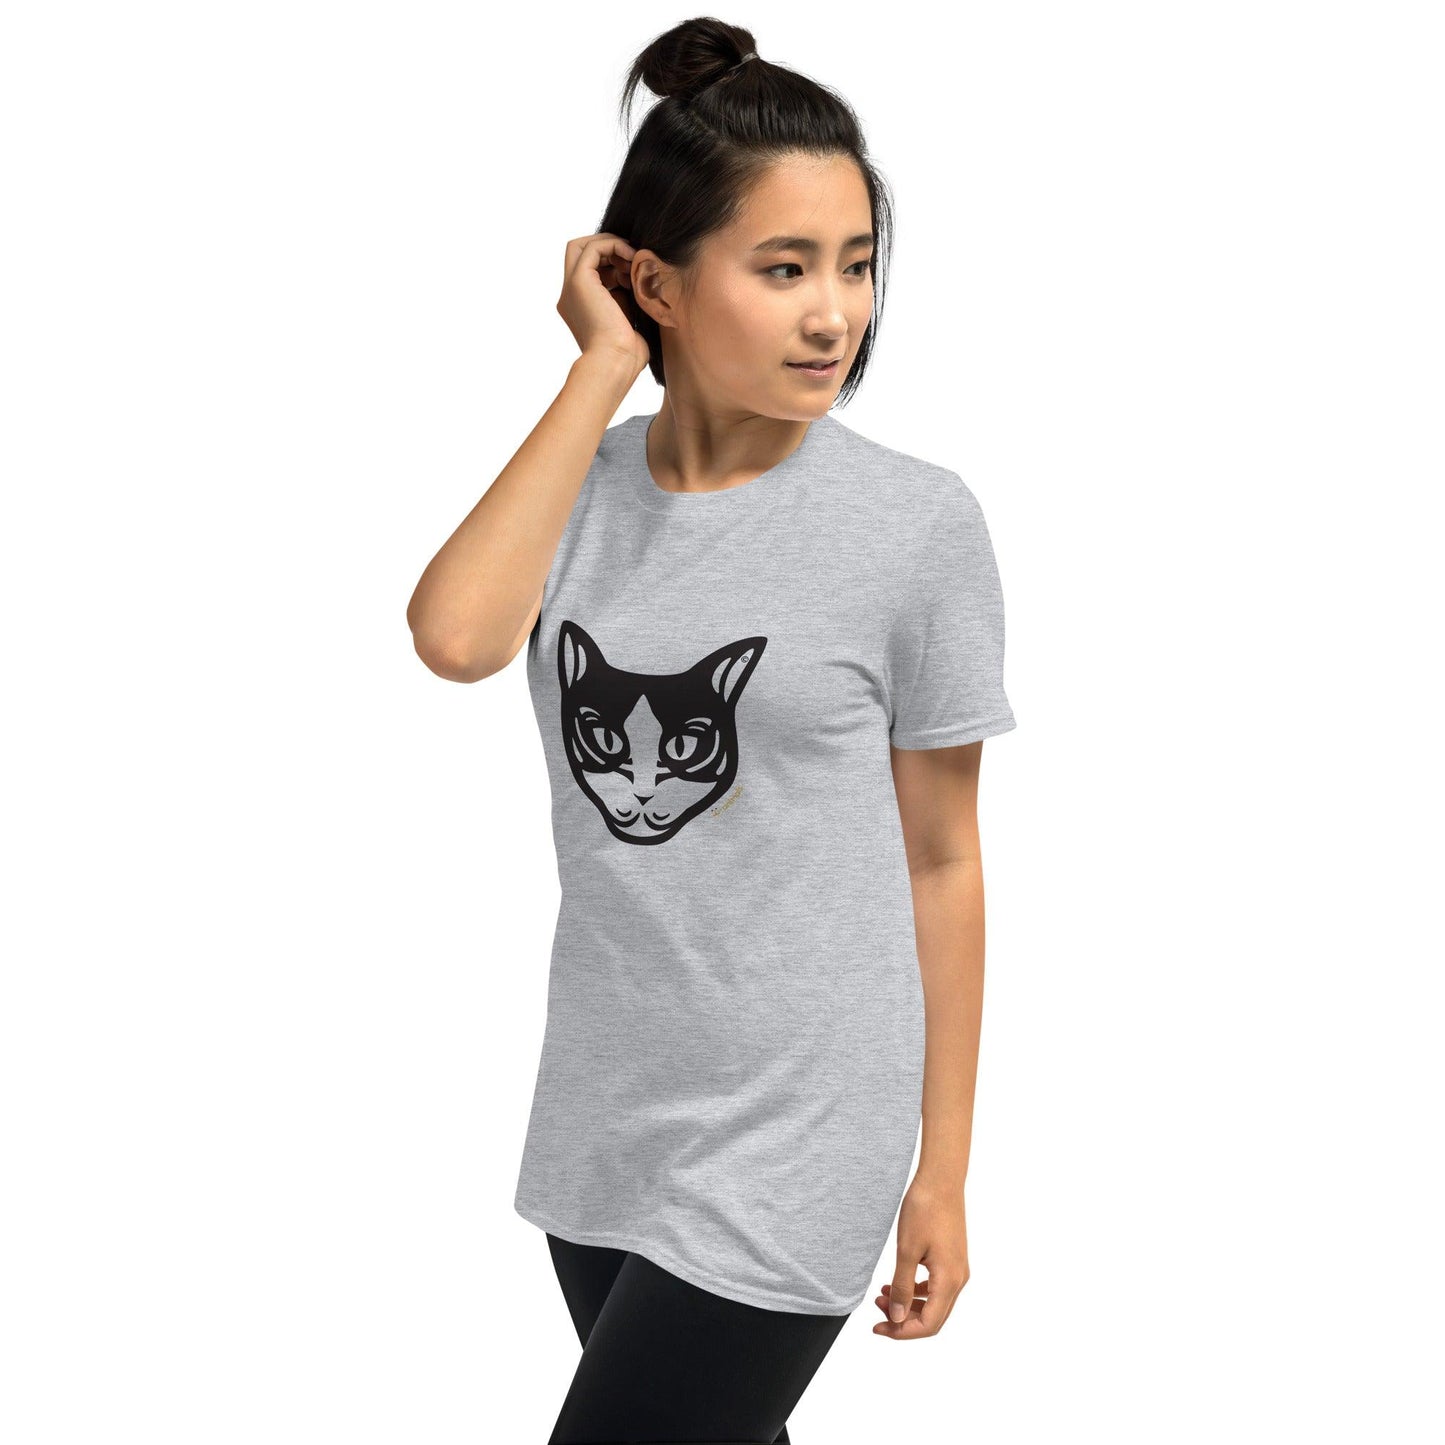 Camiseta unissex de manga curta - Gato preto e branco - Tribal - Cores Claras i-animals